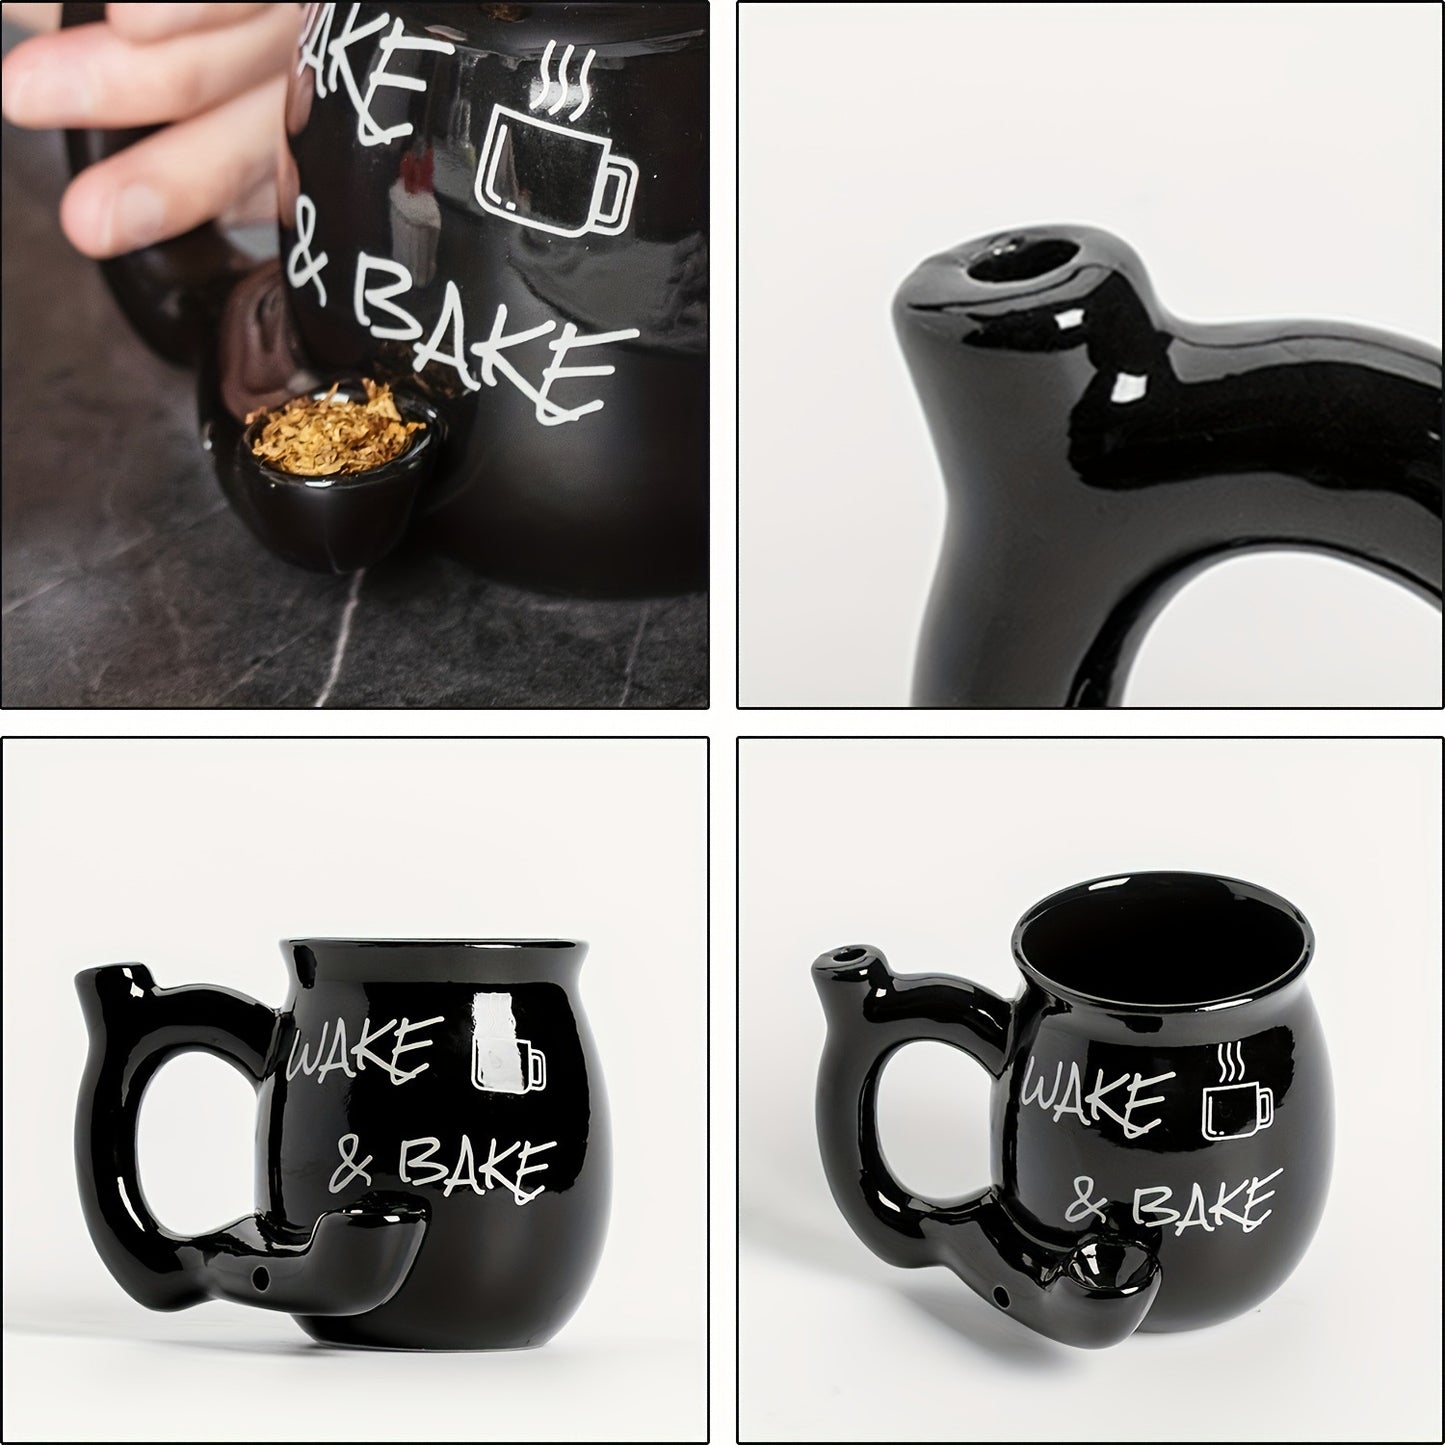 Wake & Bake Coffee Mug + Pipe